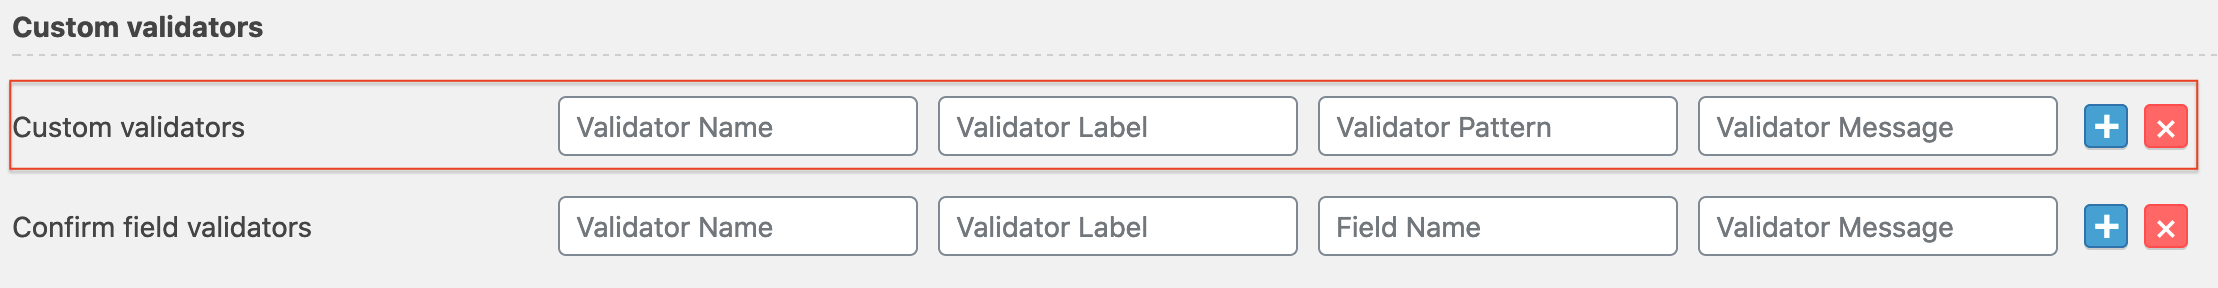 custom-validator-new-cfe.png